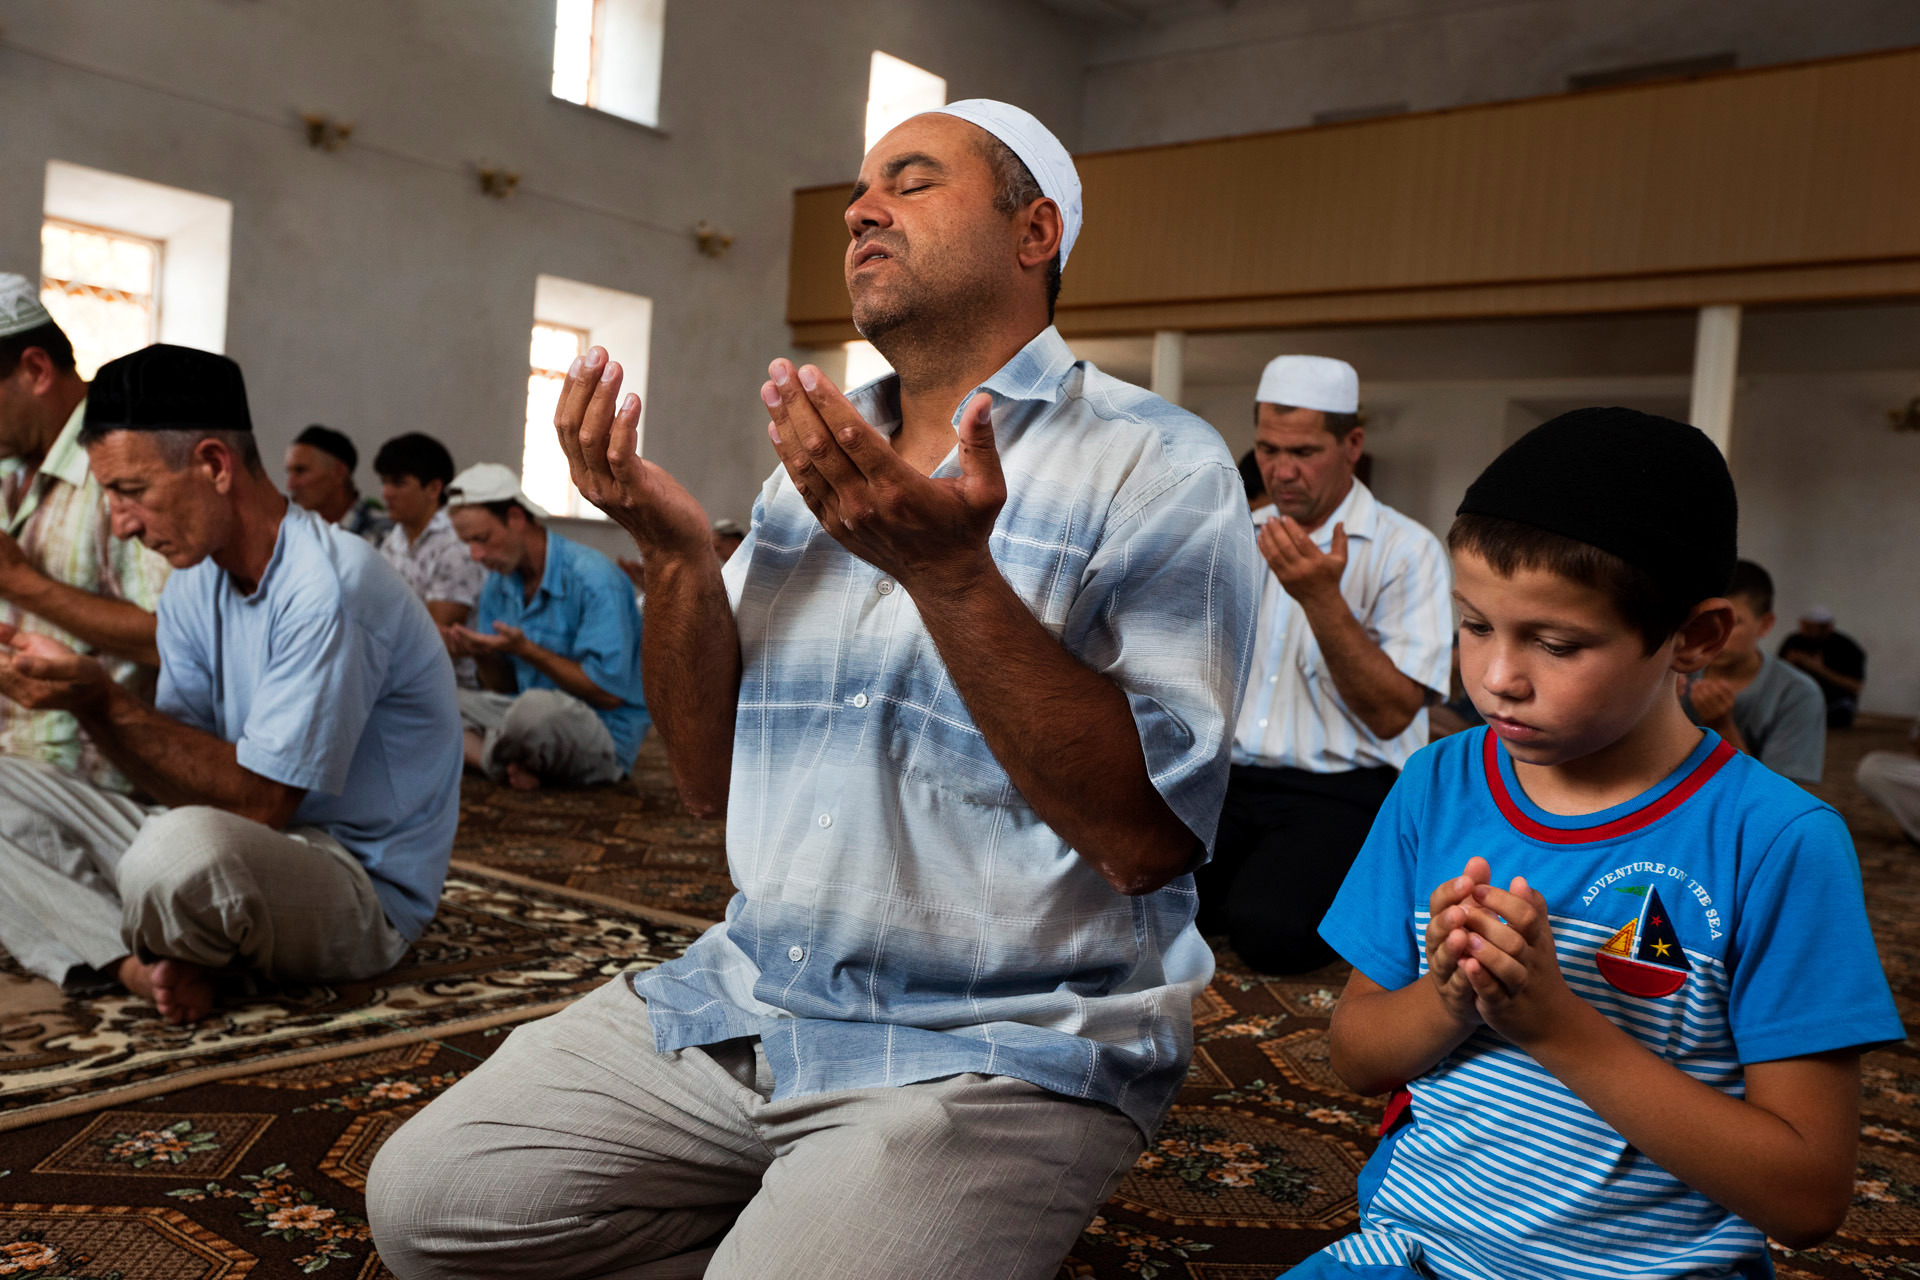  Friday prayers at the mosque in Dachnoe in Crimea, Ukraine.  Dachnoe, Crimea  